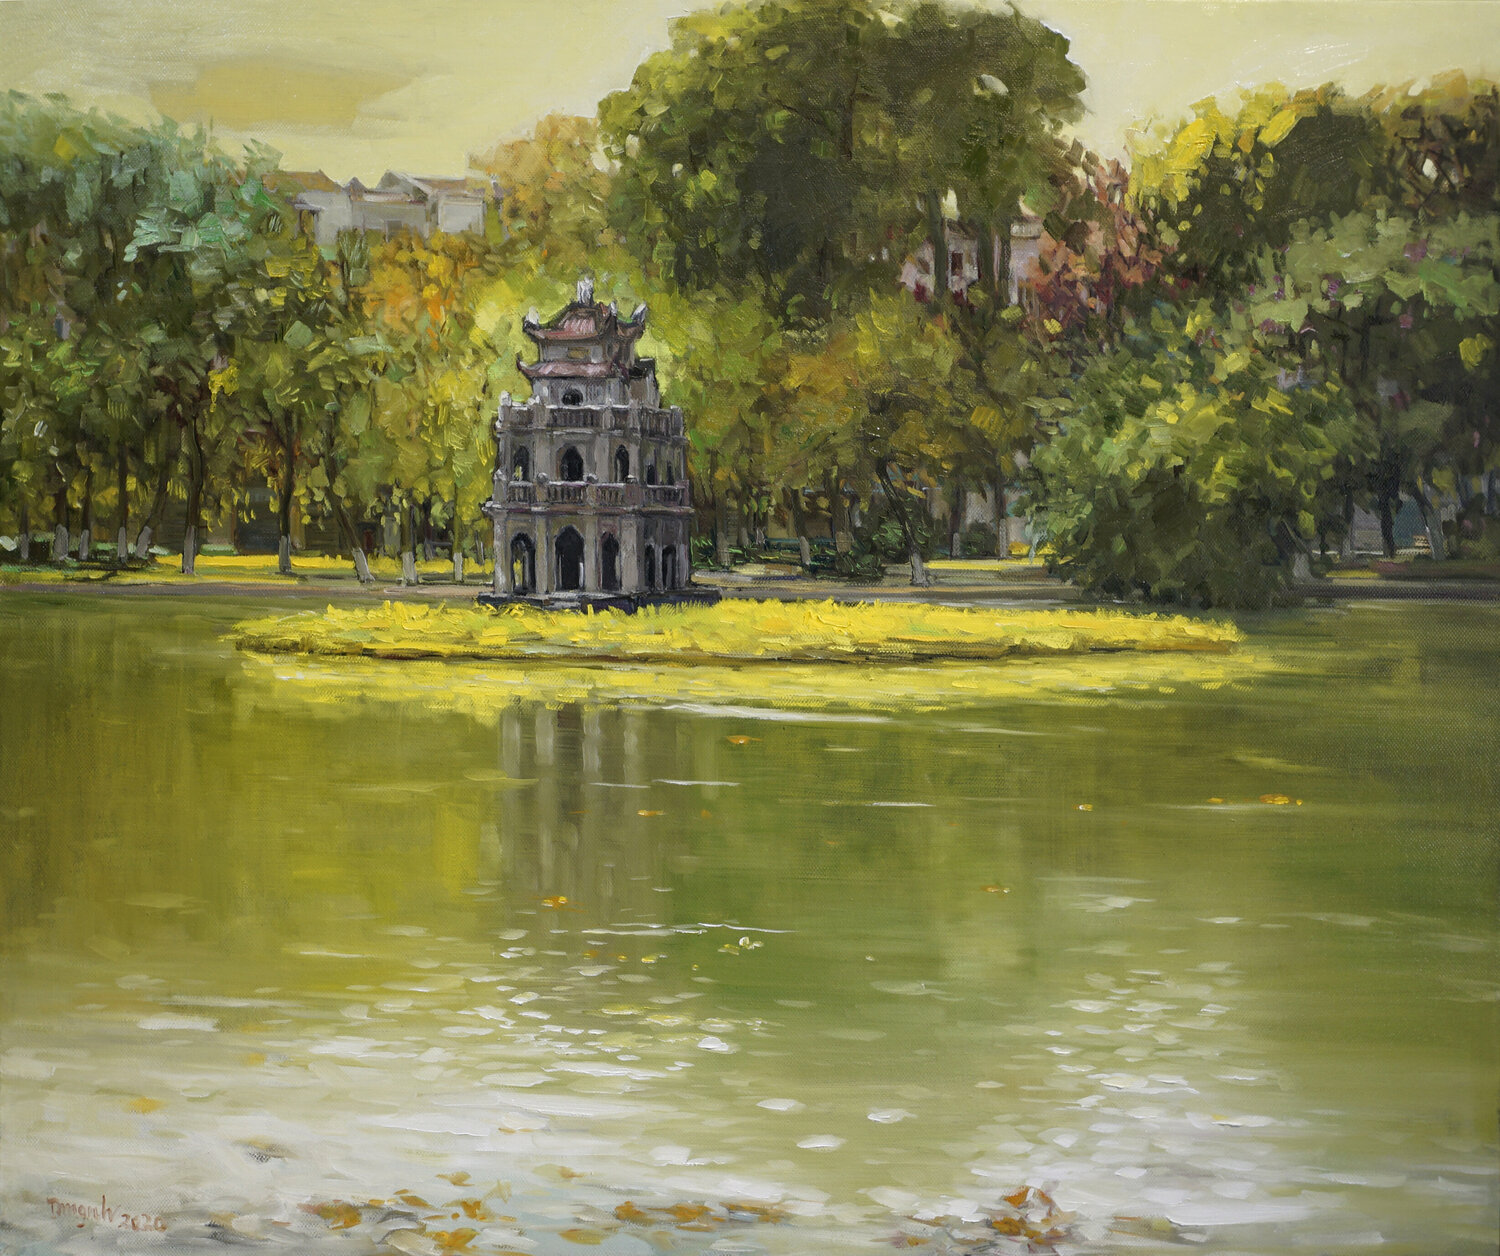 Hồ Hoàn kiếm. by LamDuc Manh (2020) : Painting Oil, Wool on Canvas ...